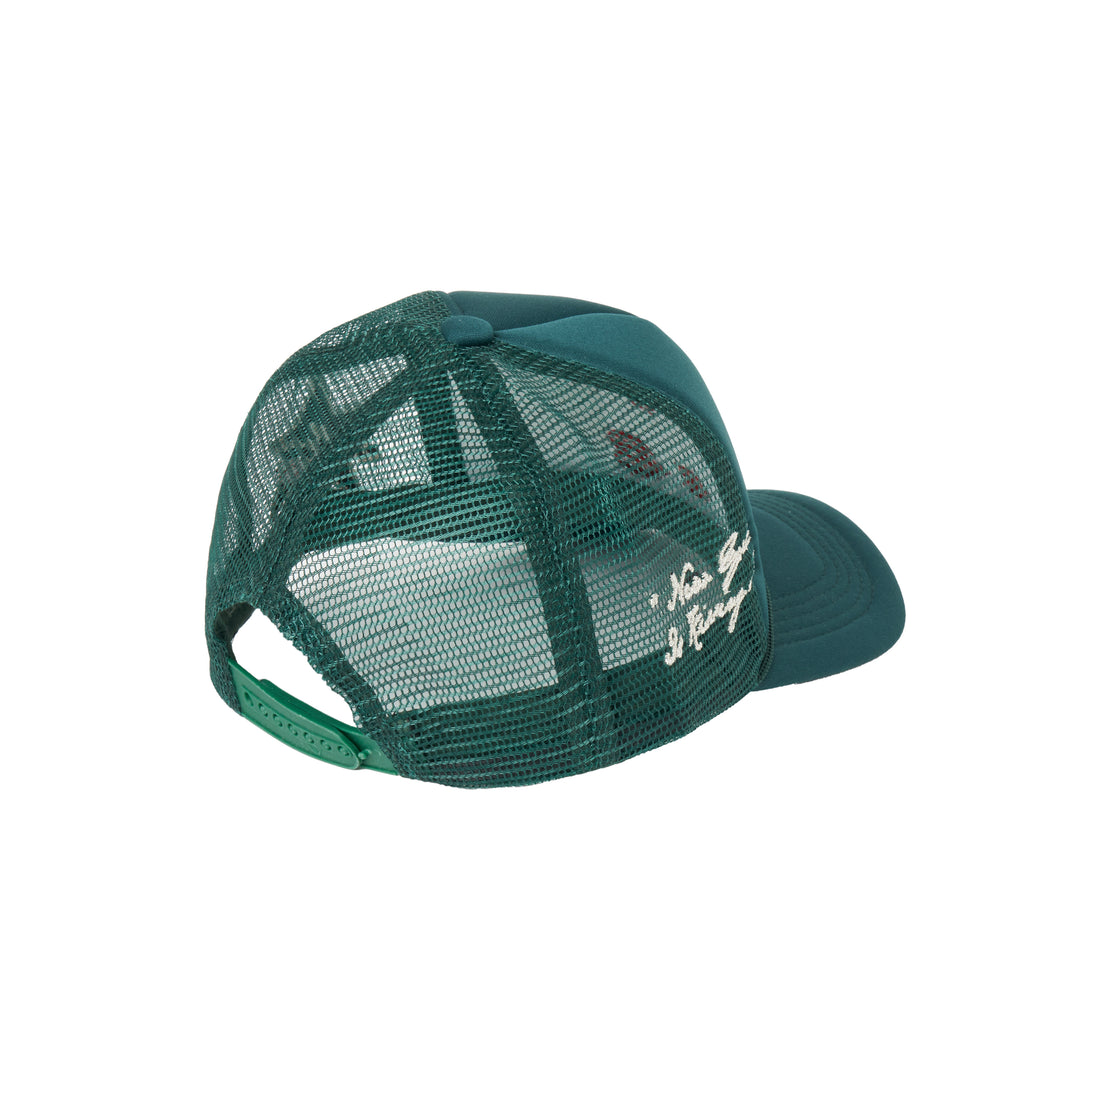 La Ropa "NY is Kissing Me" Green Trucker Hat